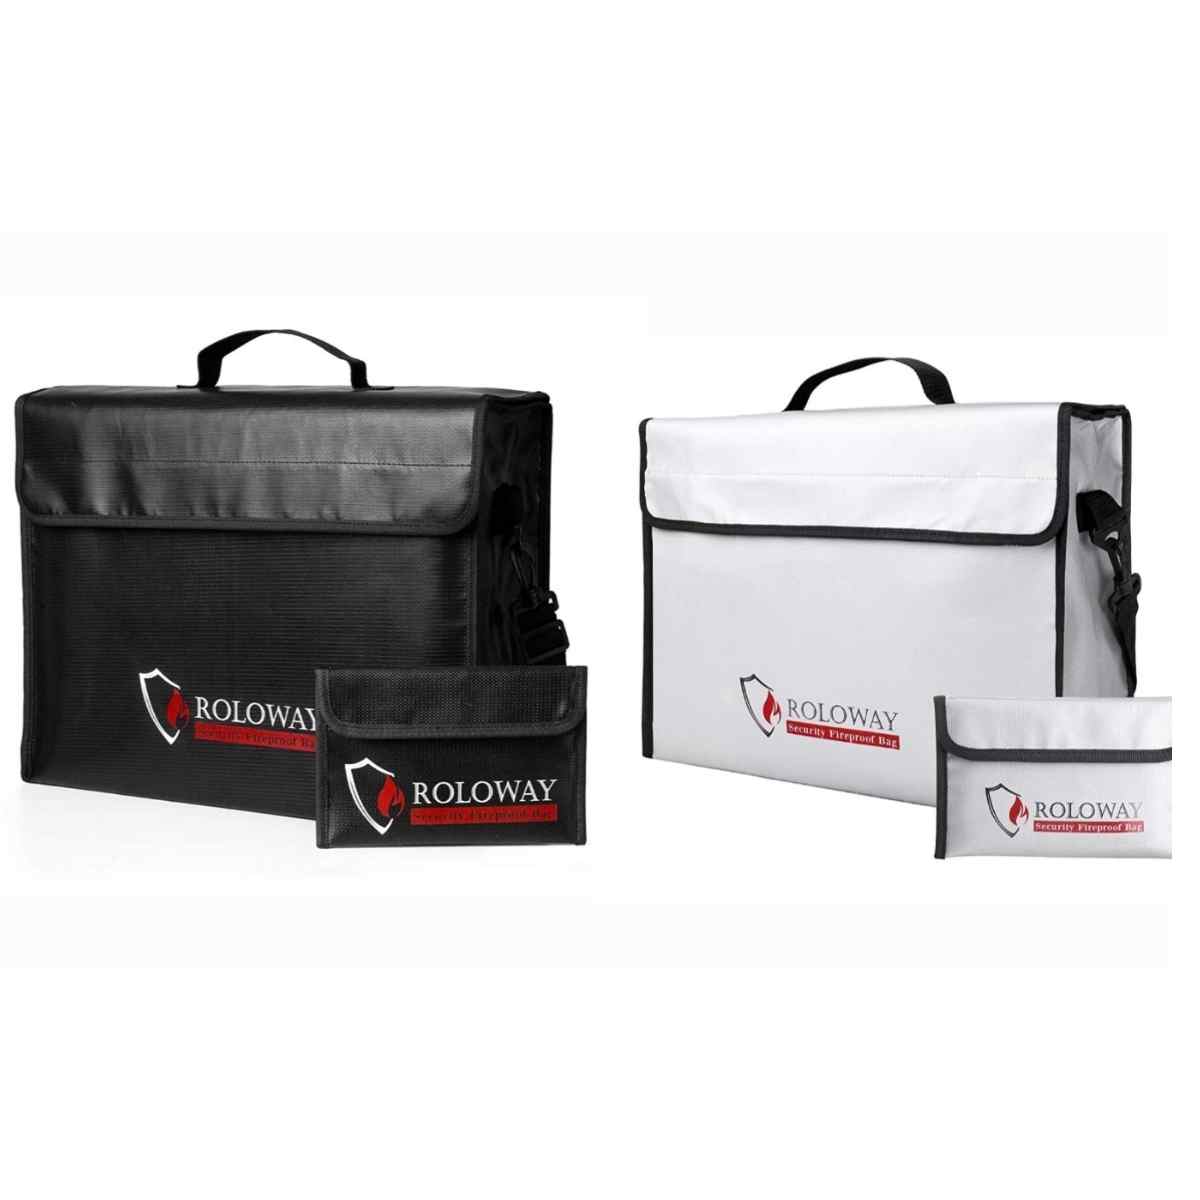 Roloway fireproof & waterproof document bags - white & black